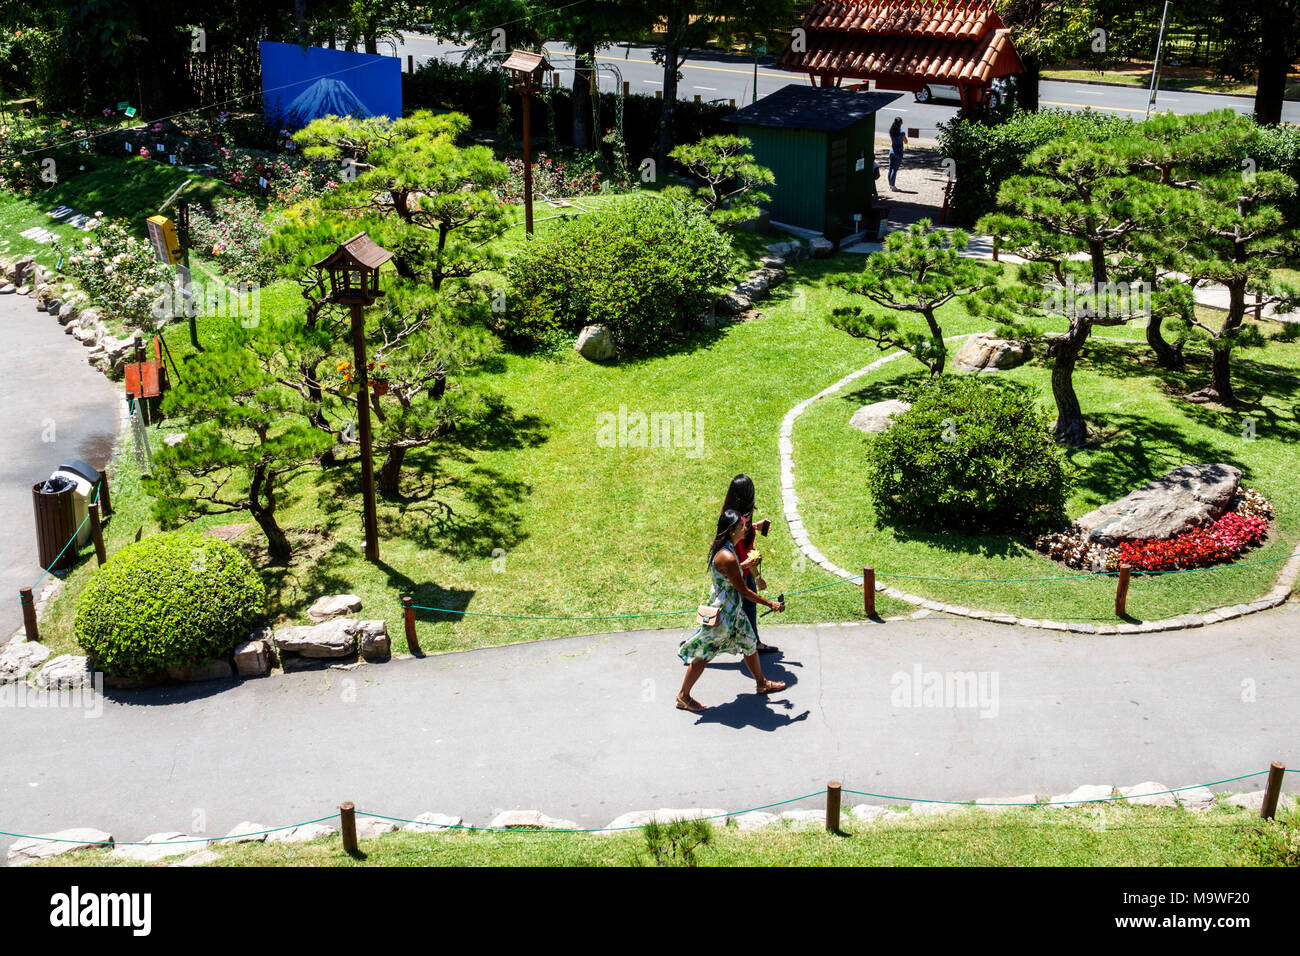 Buenos Aires Argentina,Recoleta,Japones giardino giapponese,botanica,vista dall'alto,donna donne,camminando,percorso,ispanico,ARG171130078 Foto Stock